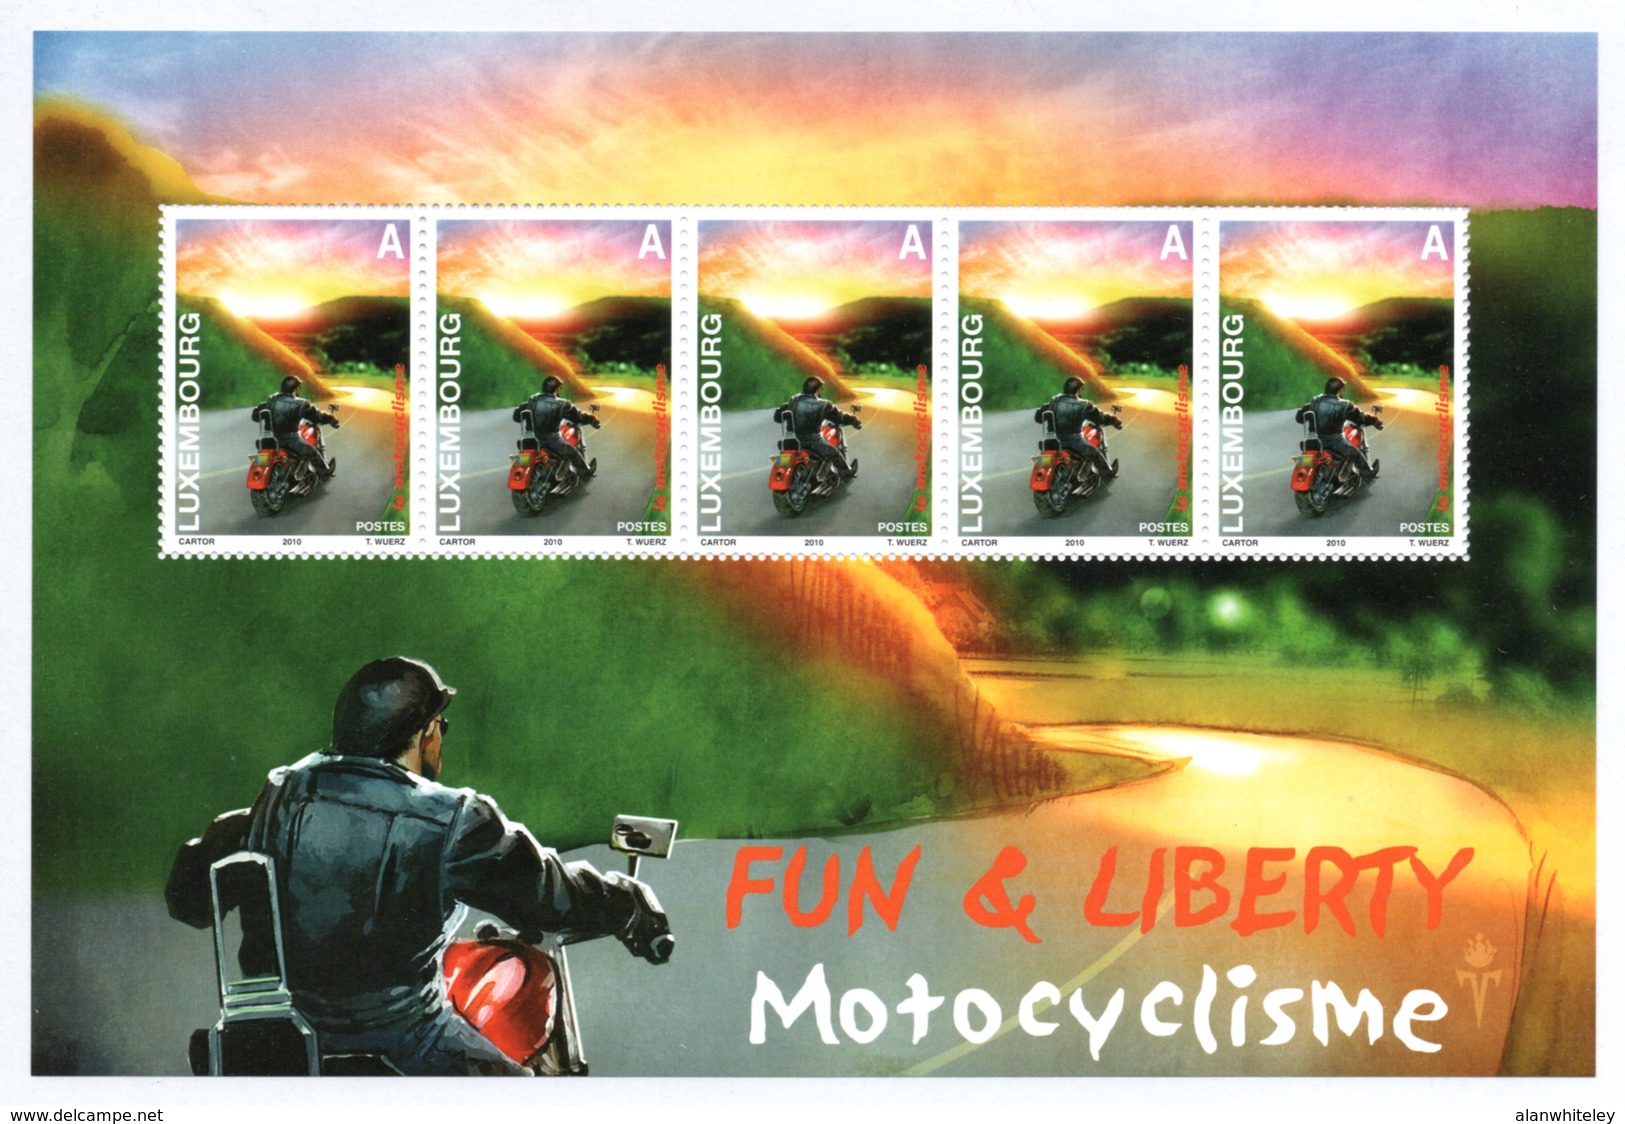 LUXEMBOURG 2010 Leisure & Liberty / Motorcycling: Sheet Of 5 Stamps UM/MNH - Neufs